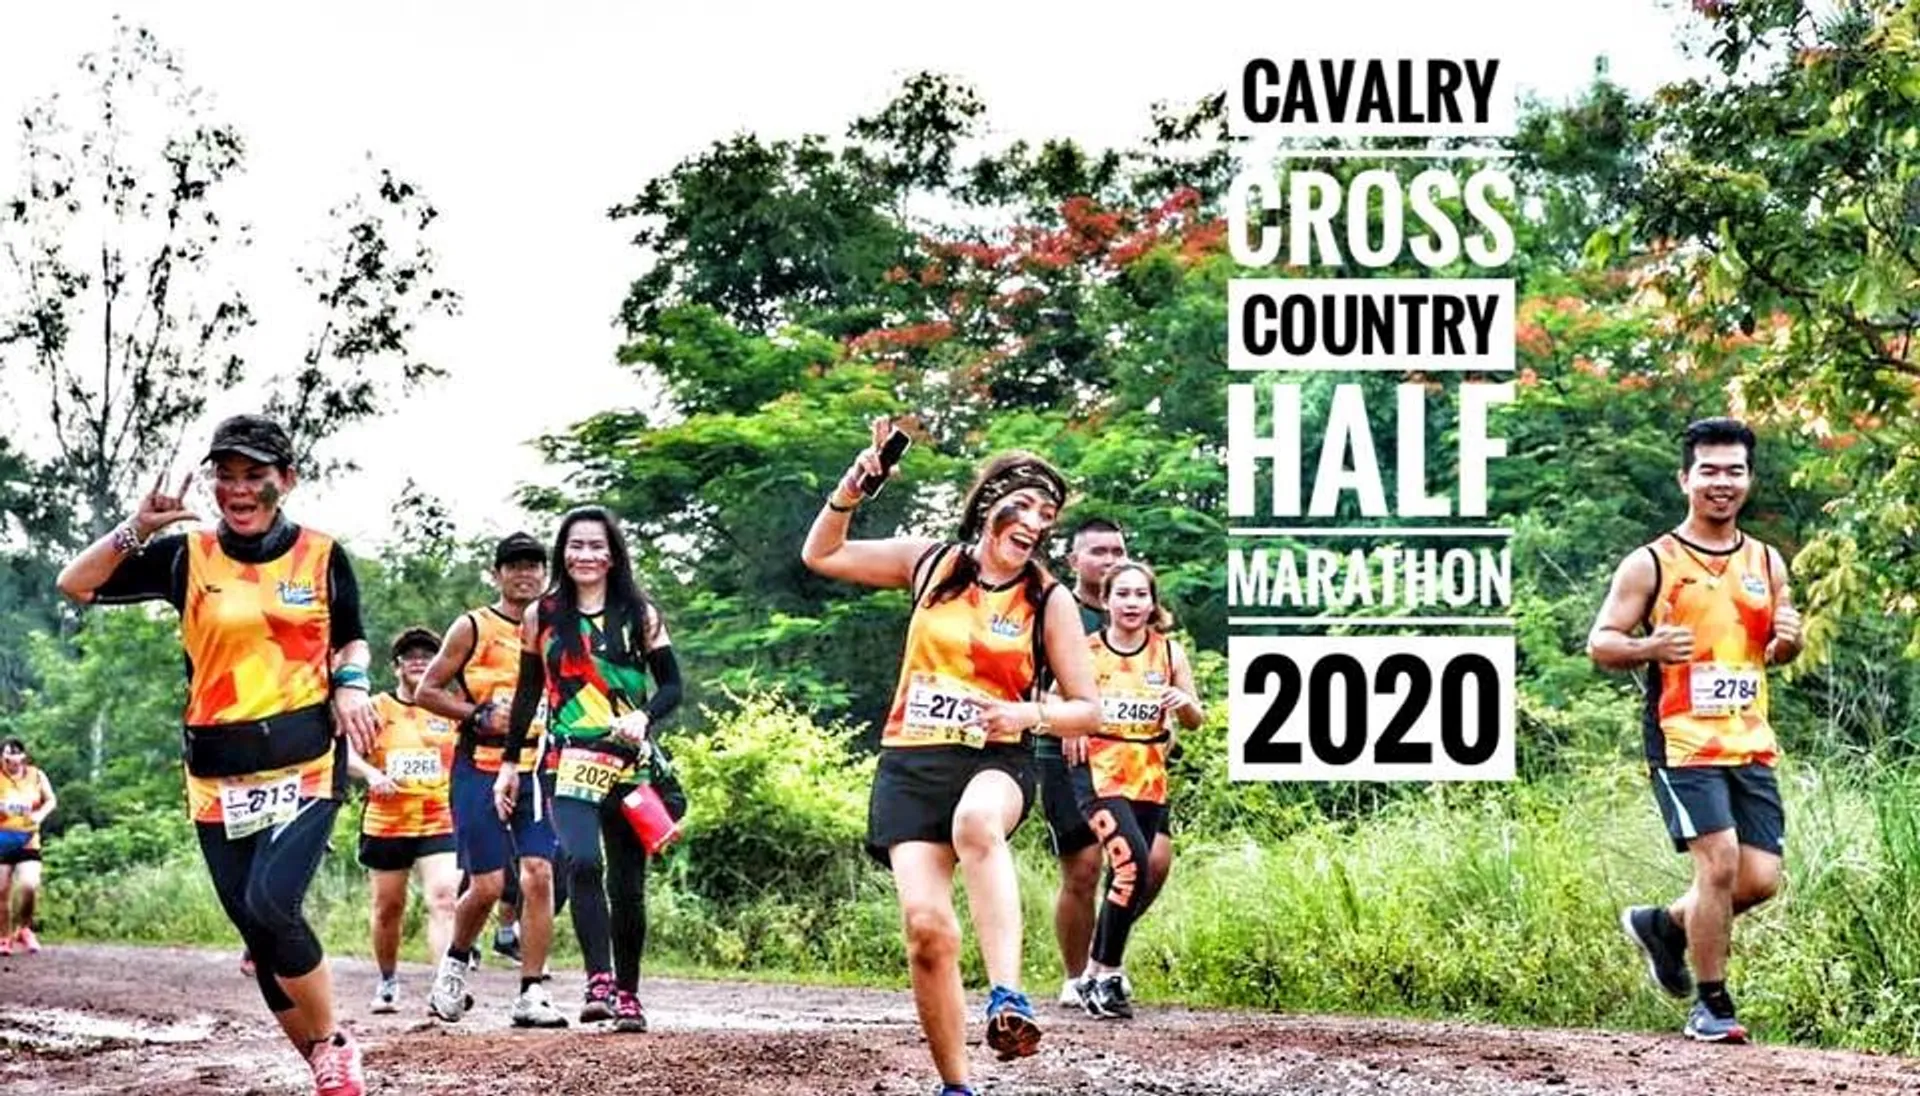 Cavalry Cross Country Half Marathon